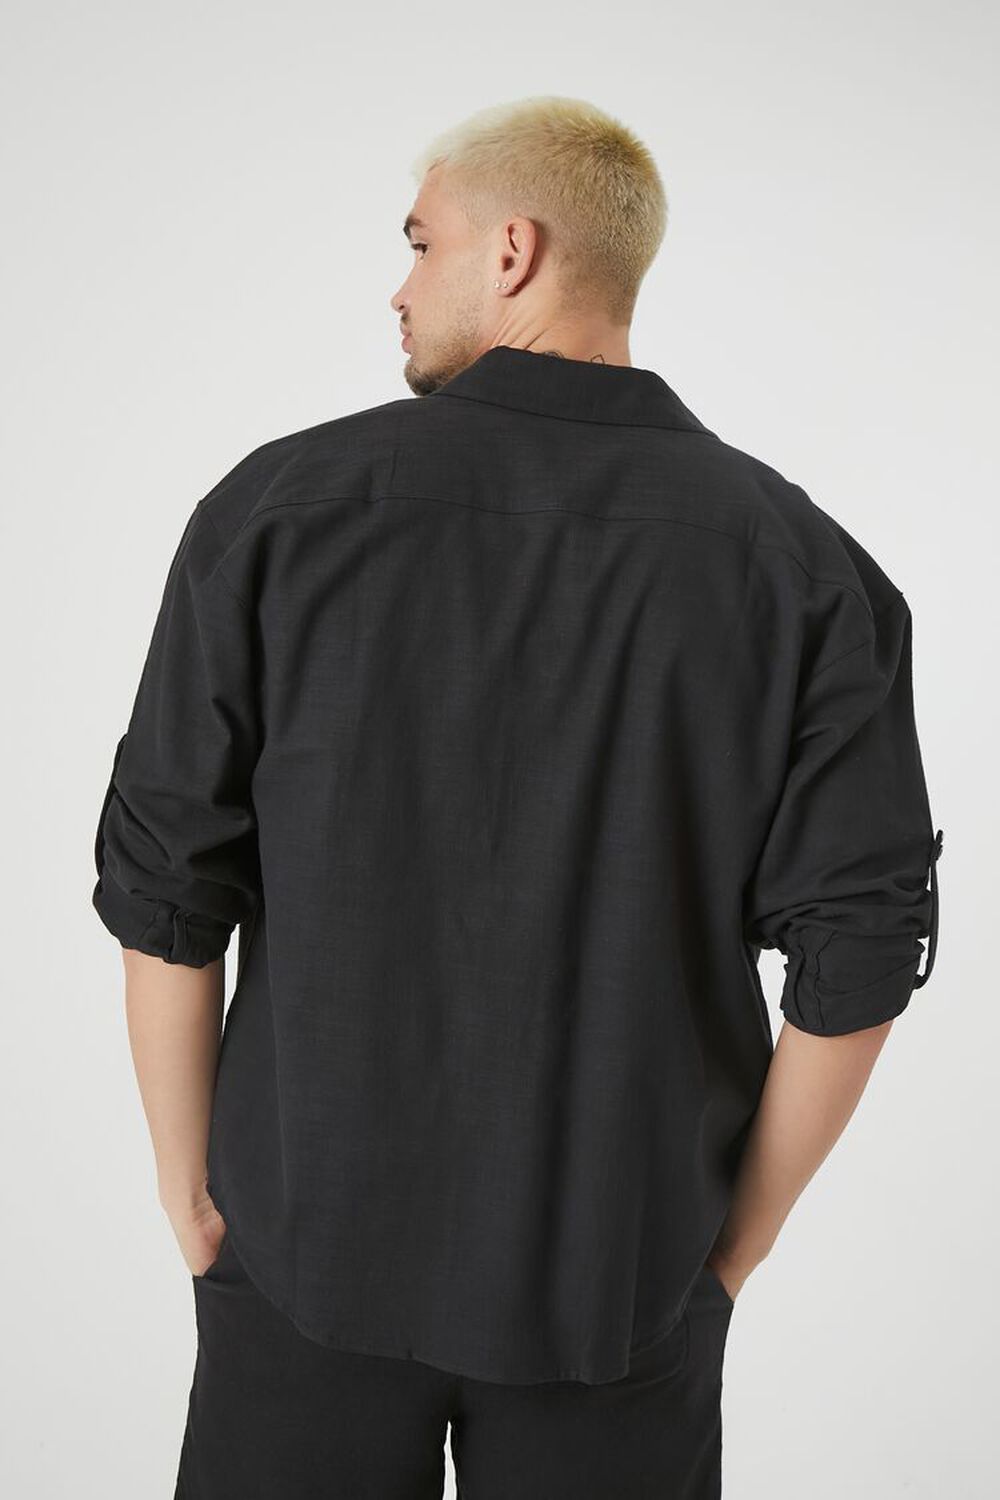 BLACK Textured Curved-Hem Shirt, image 3